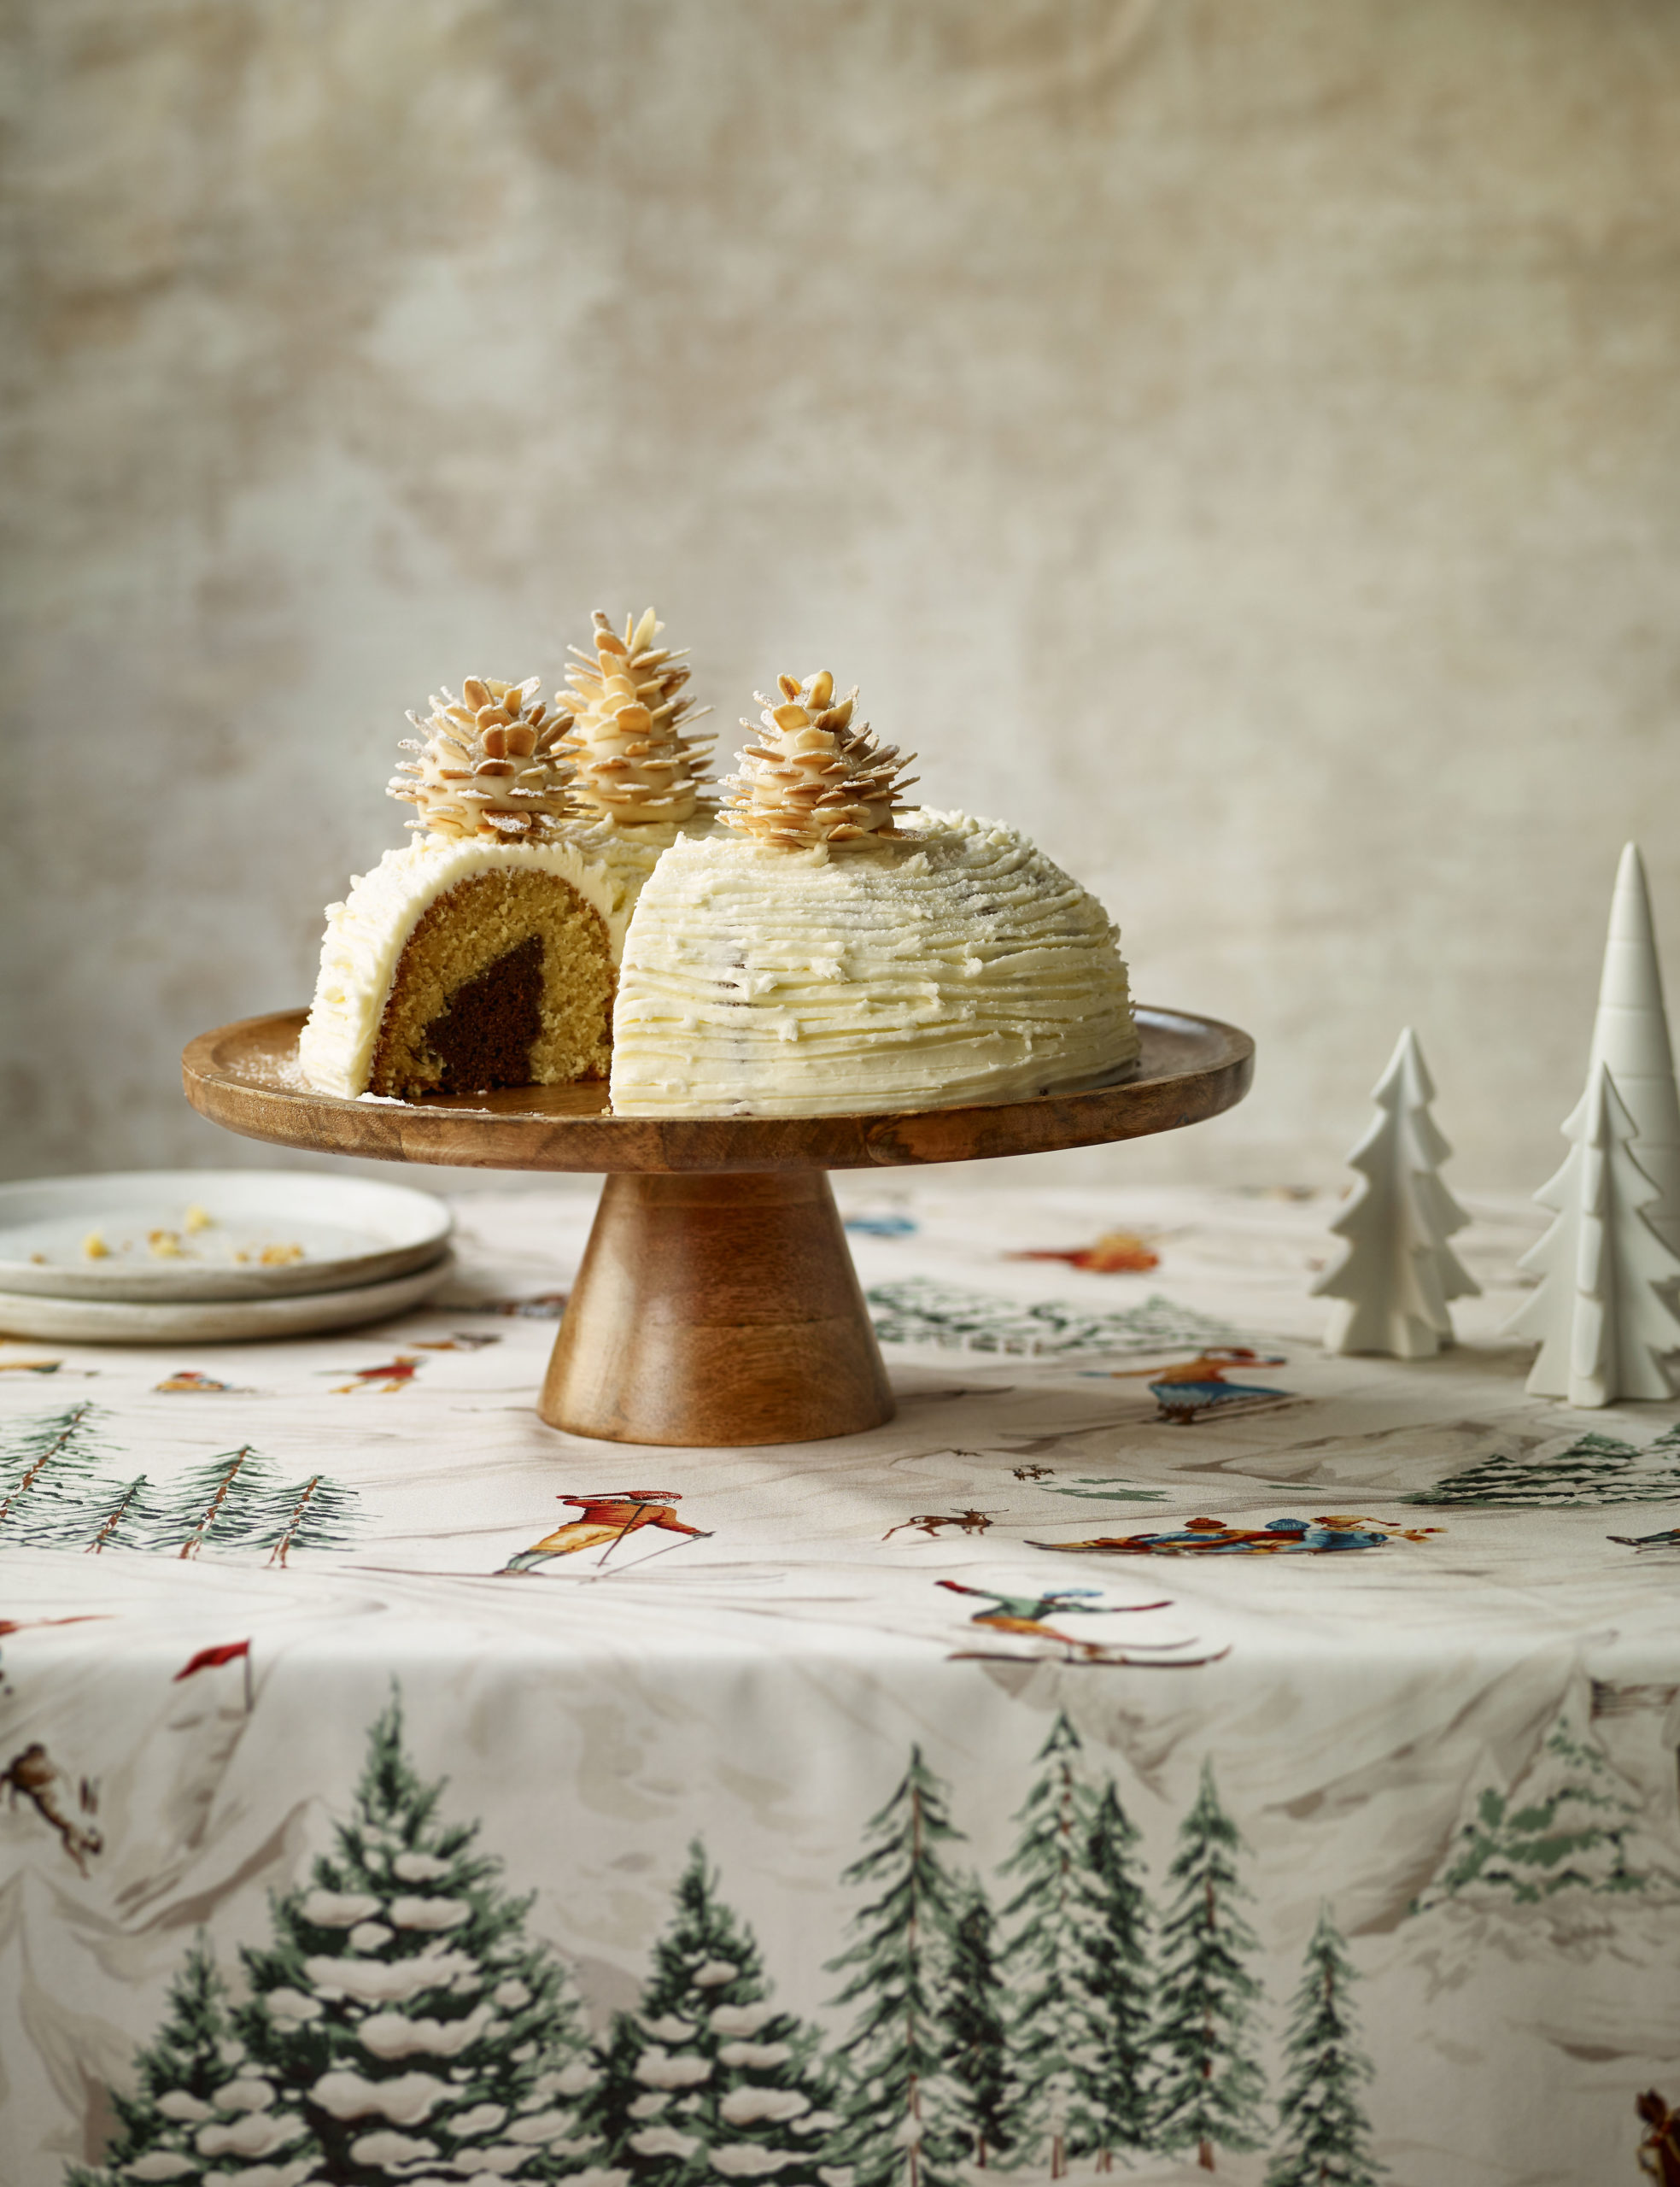 Your Alternative Christmas Cake - by Edd Kimber